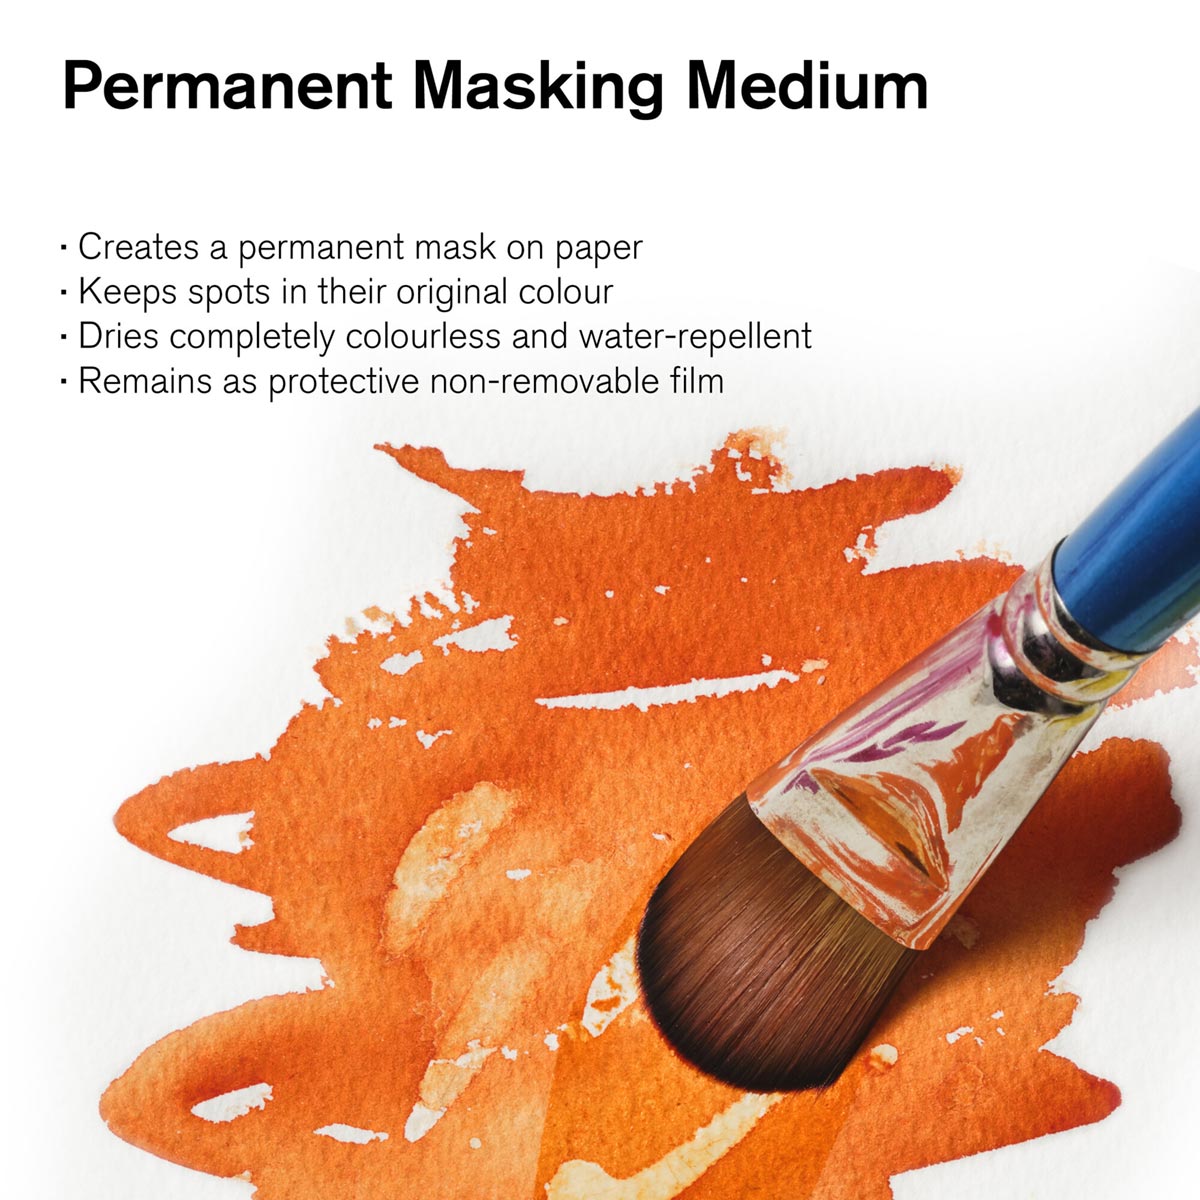 Winsor and Newton - Permanent Masking Medium - 75ml